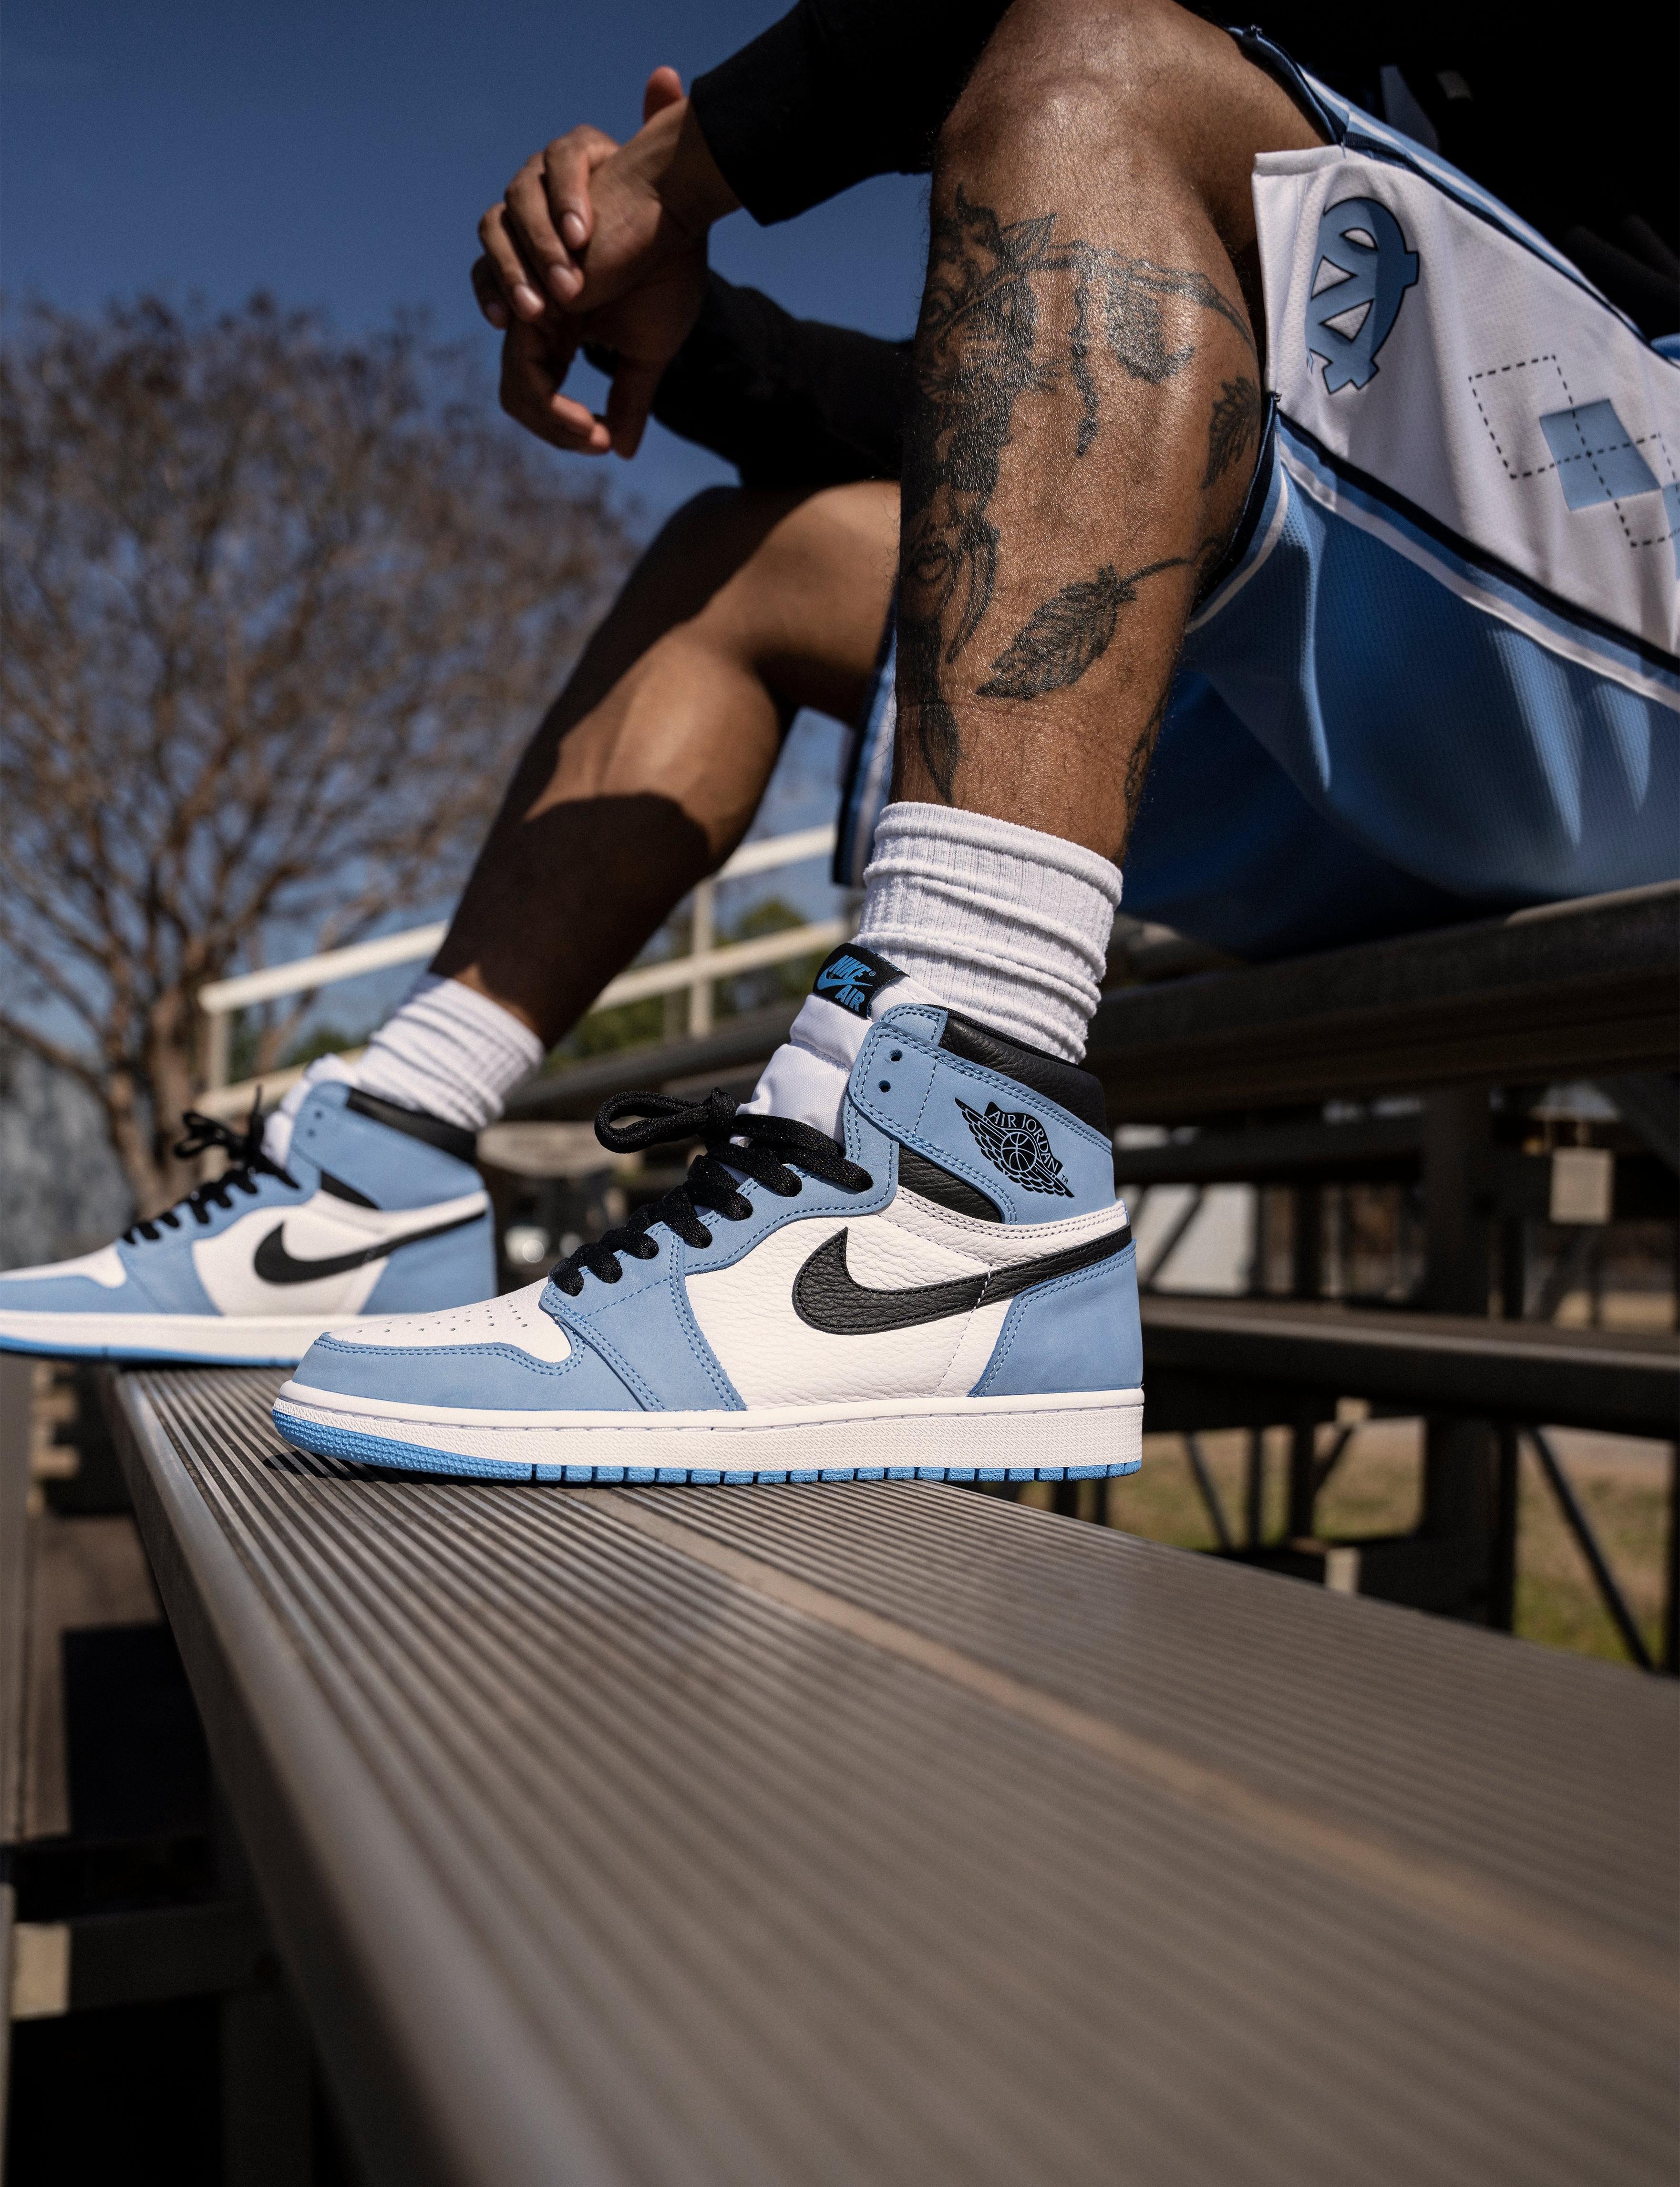 Sneakers Release – “University Blue” UNC ...